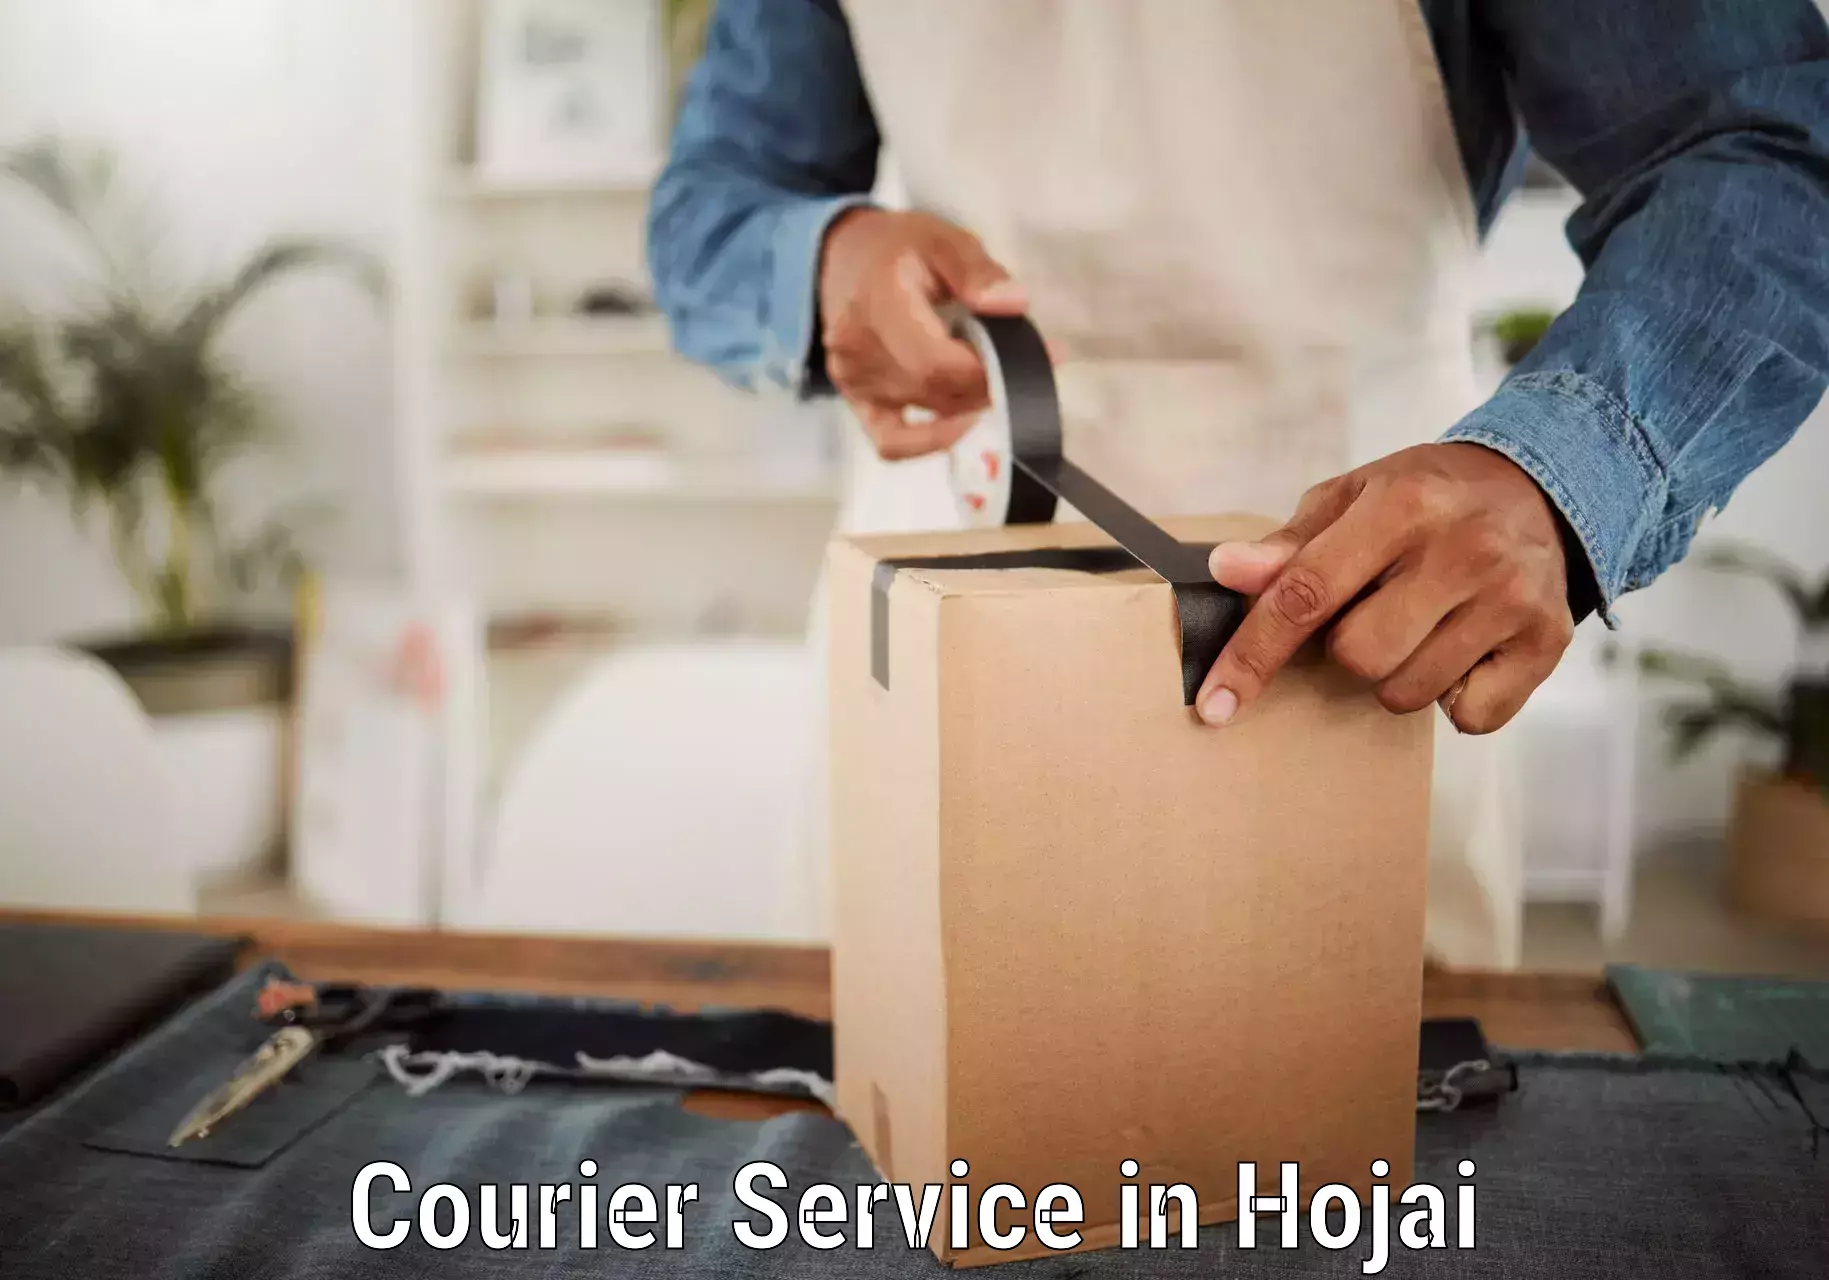 Speedy delivery service in Hojai